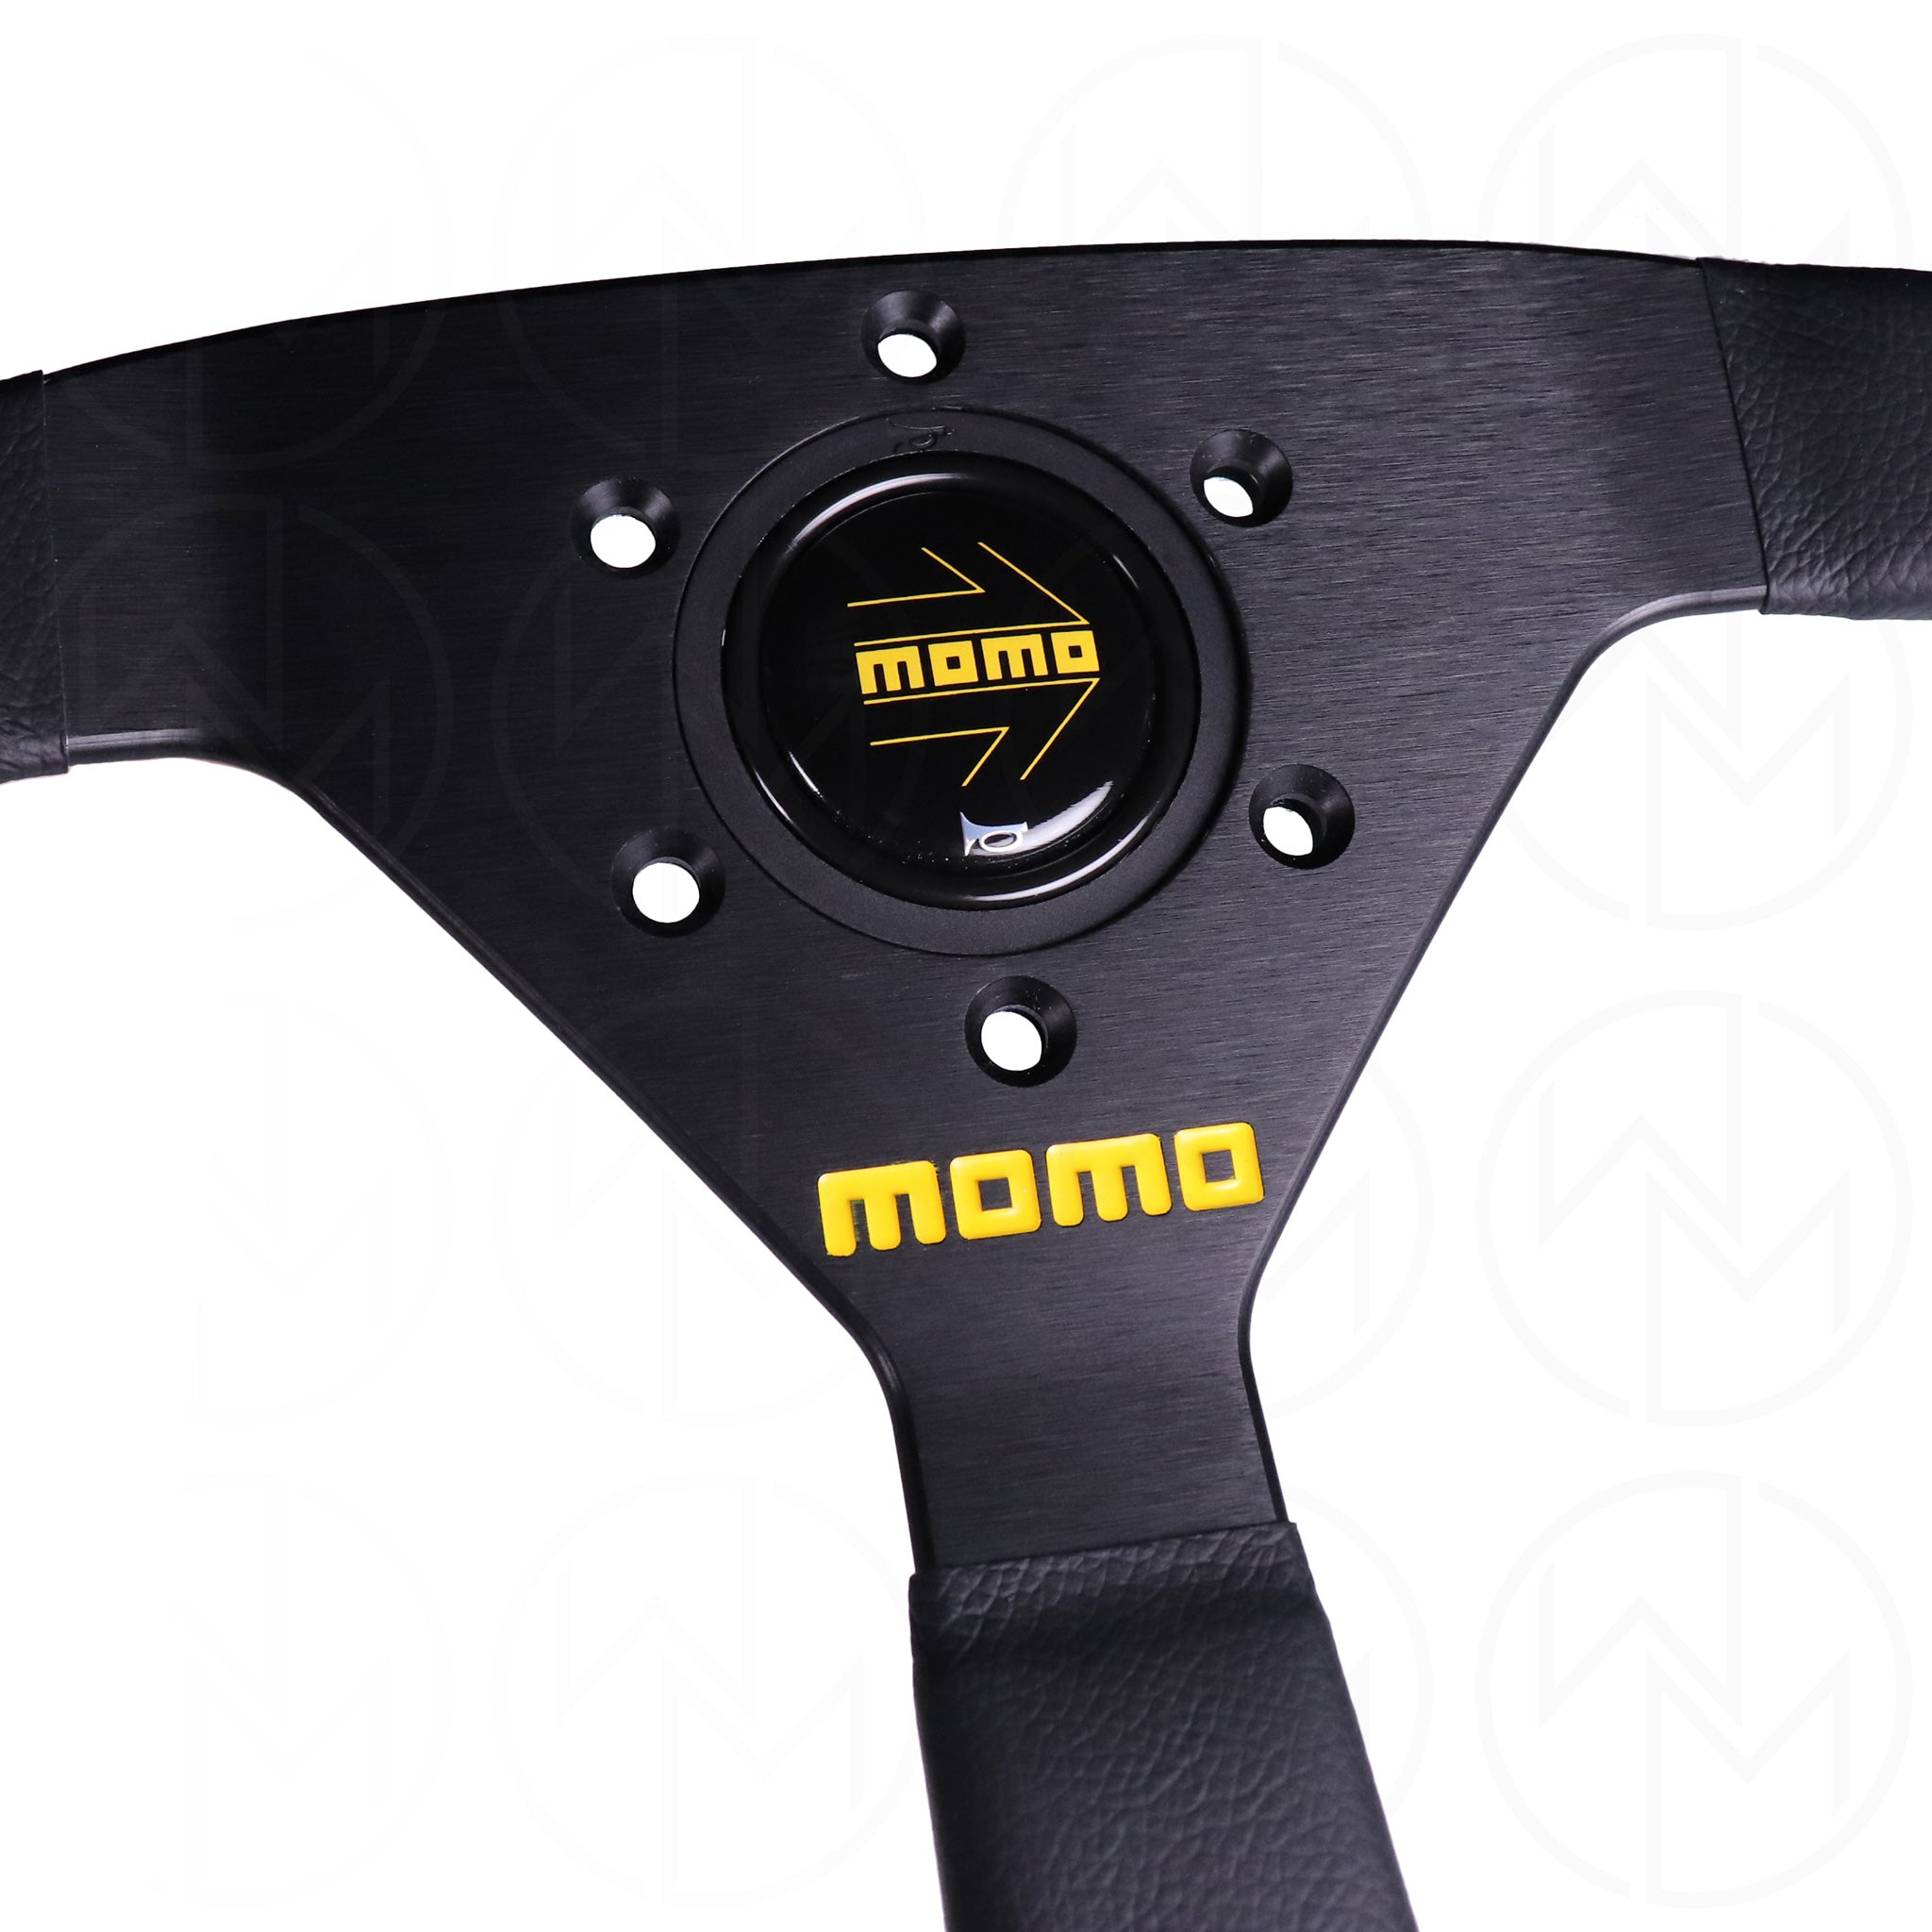 Momo Mod. 78 Steering Wheel - 330mm Leather